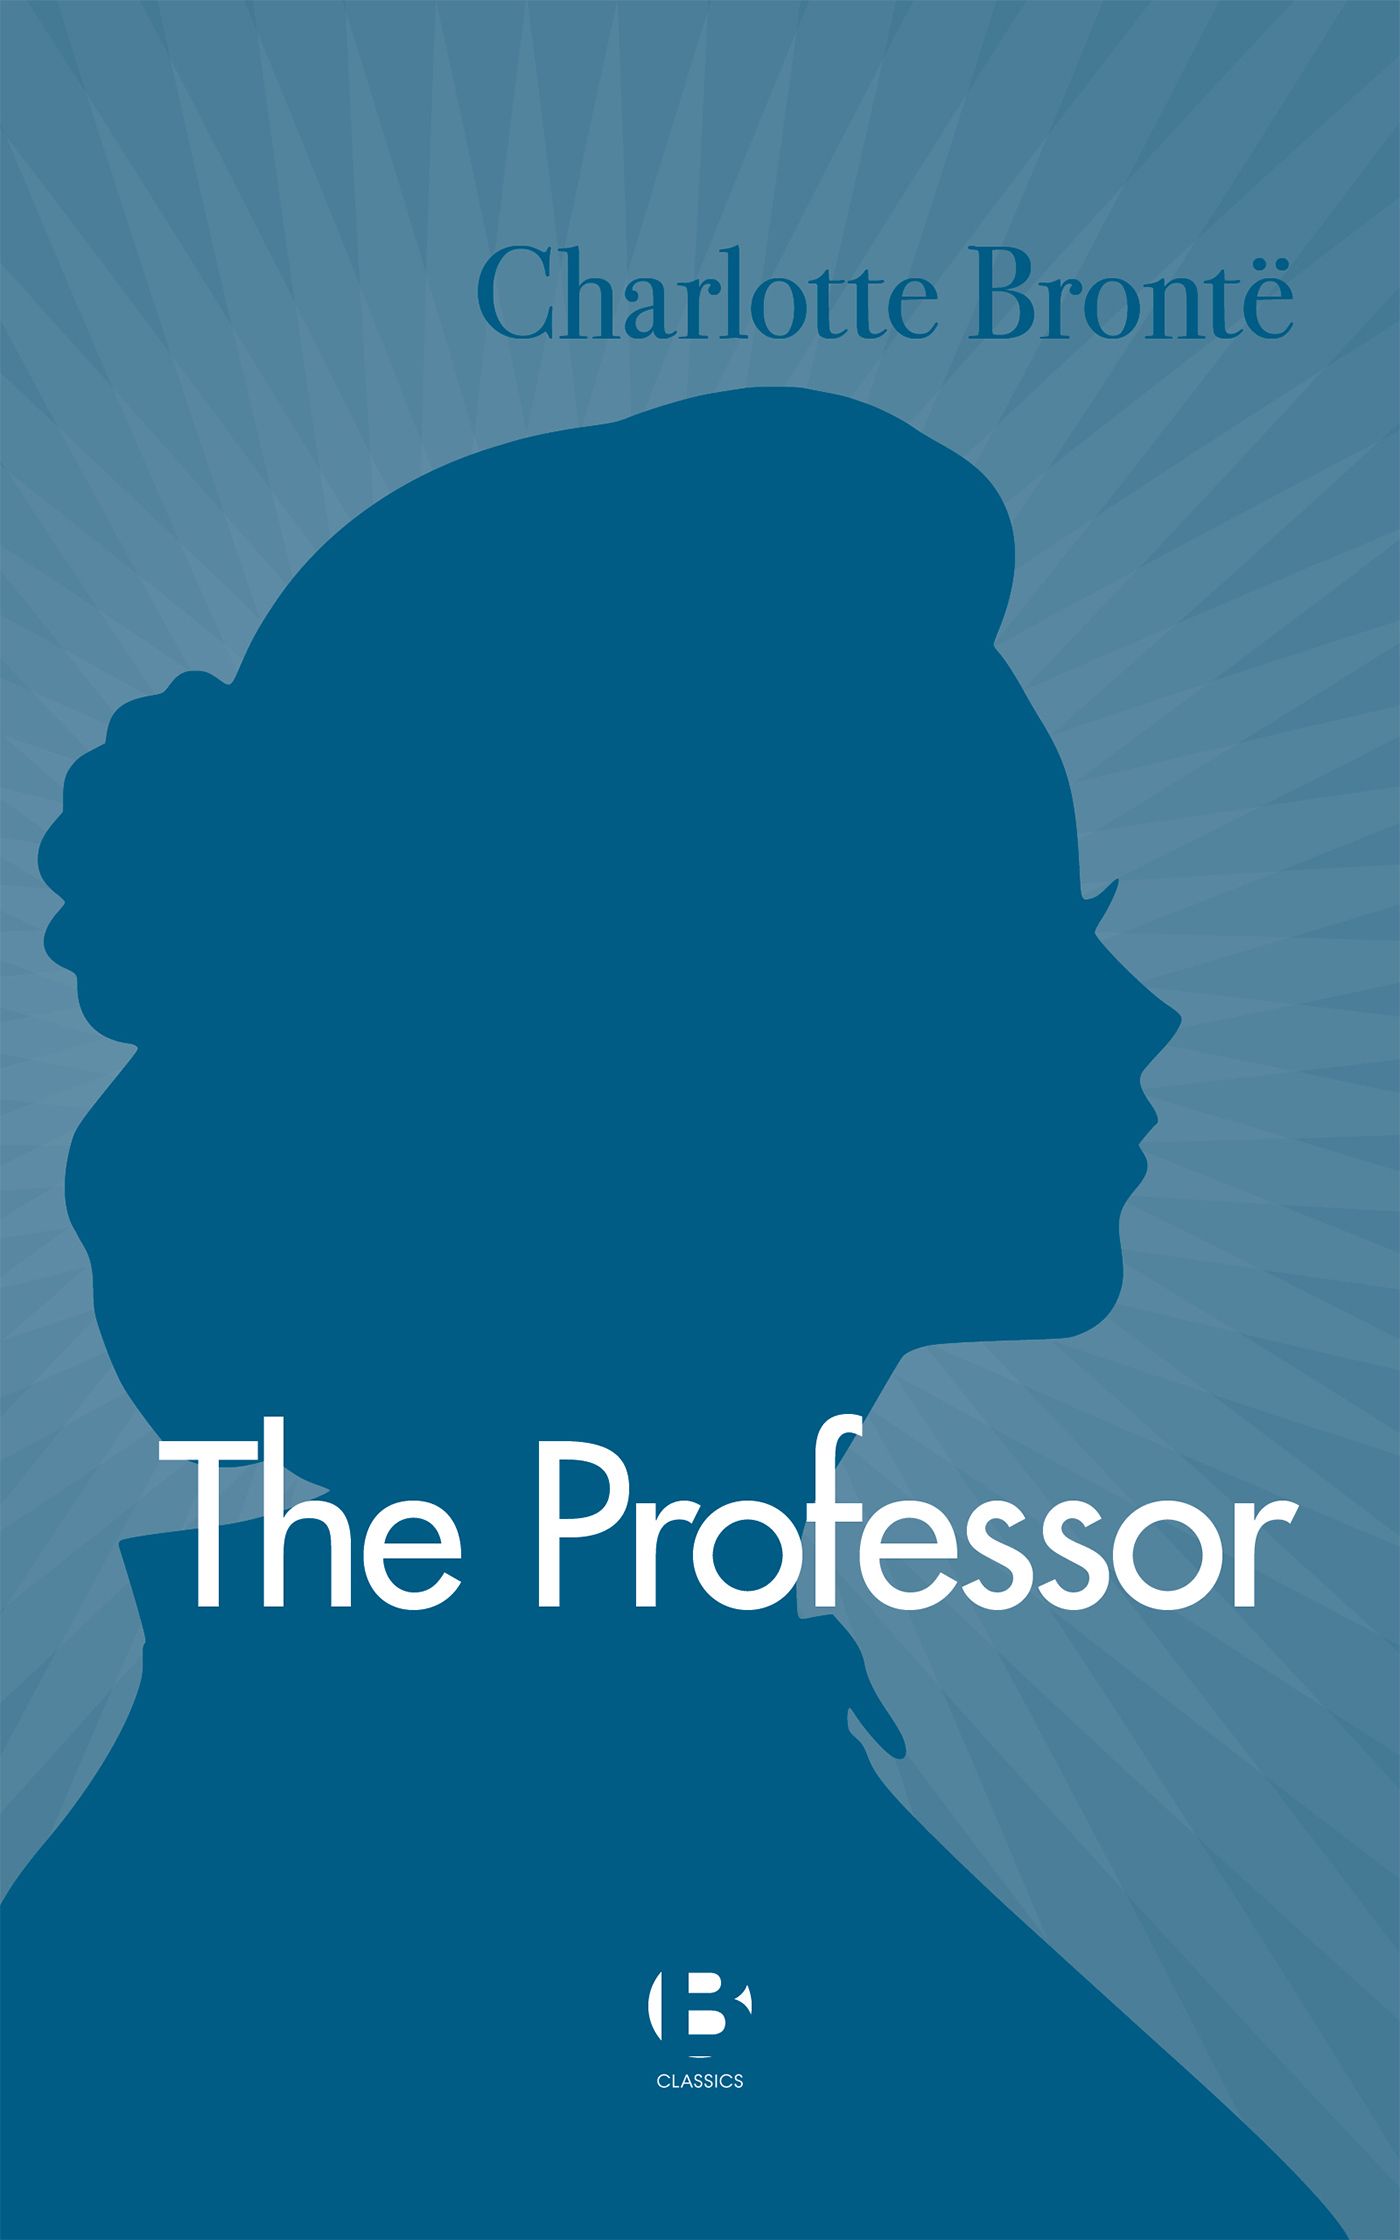 The Professor, eBook by Charlotte Brontë